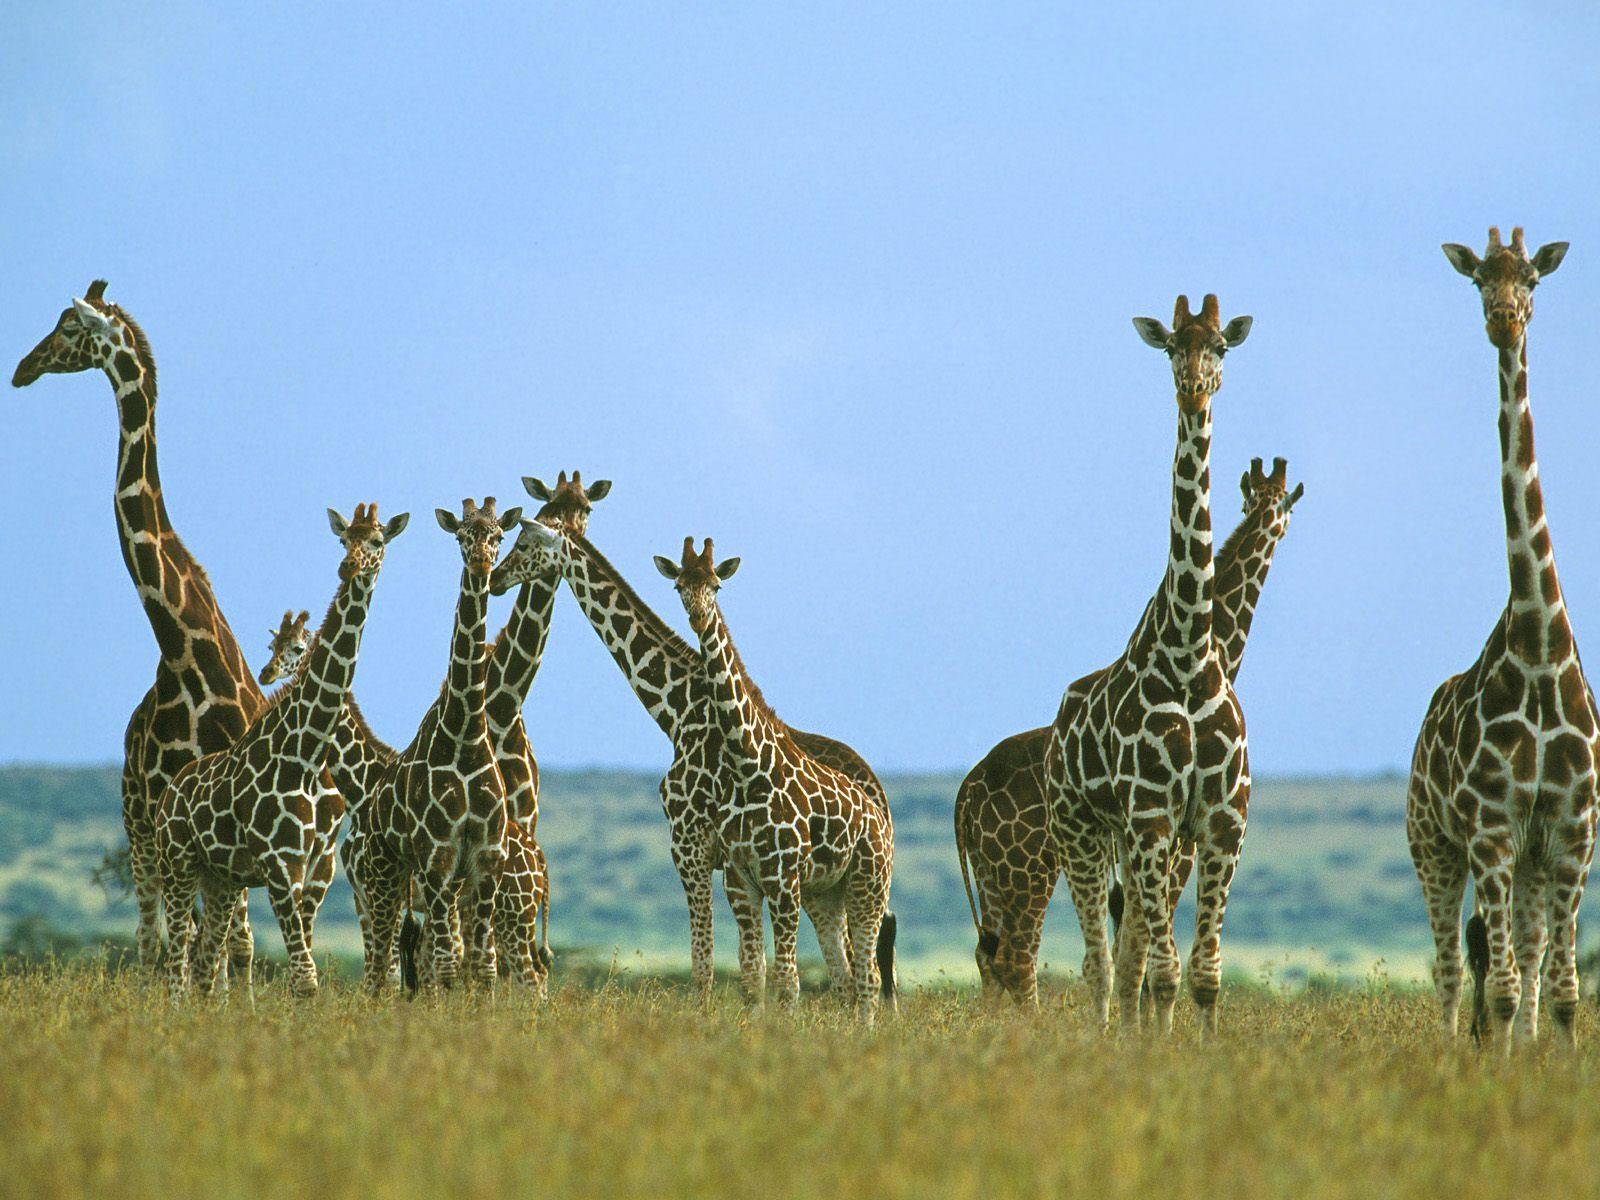 Giraffe Kenya Africa free desktop background wallpaper image